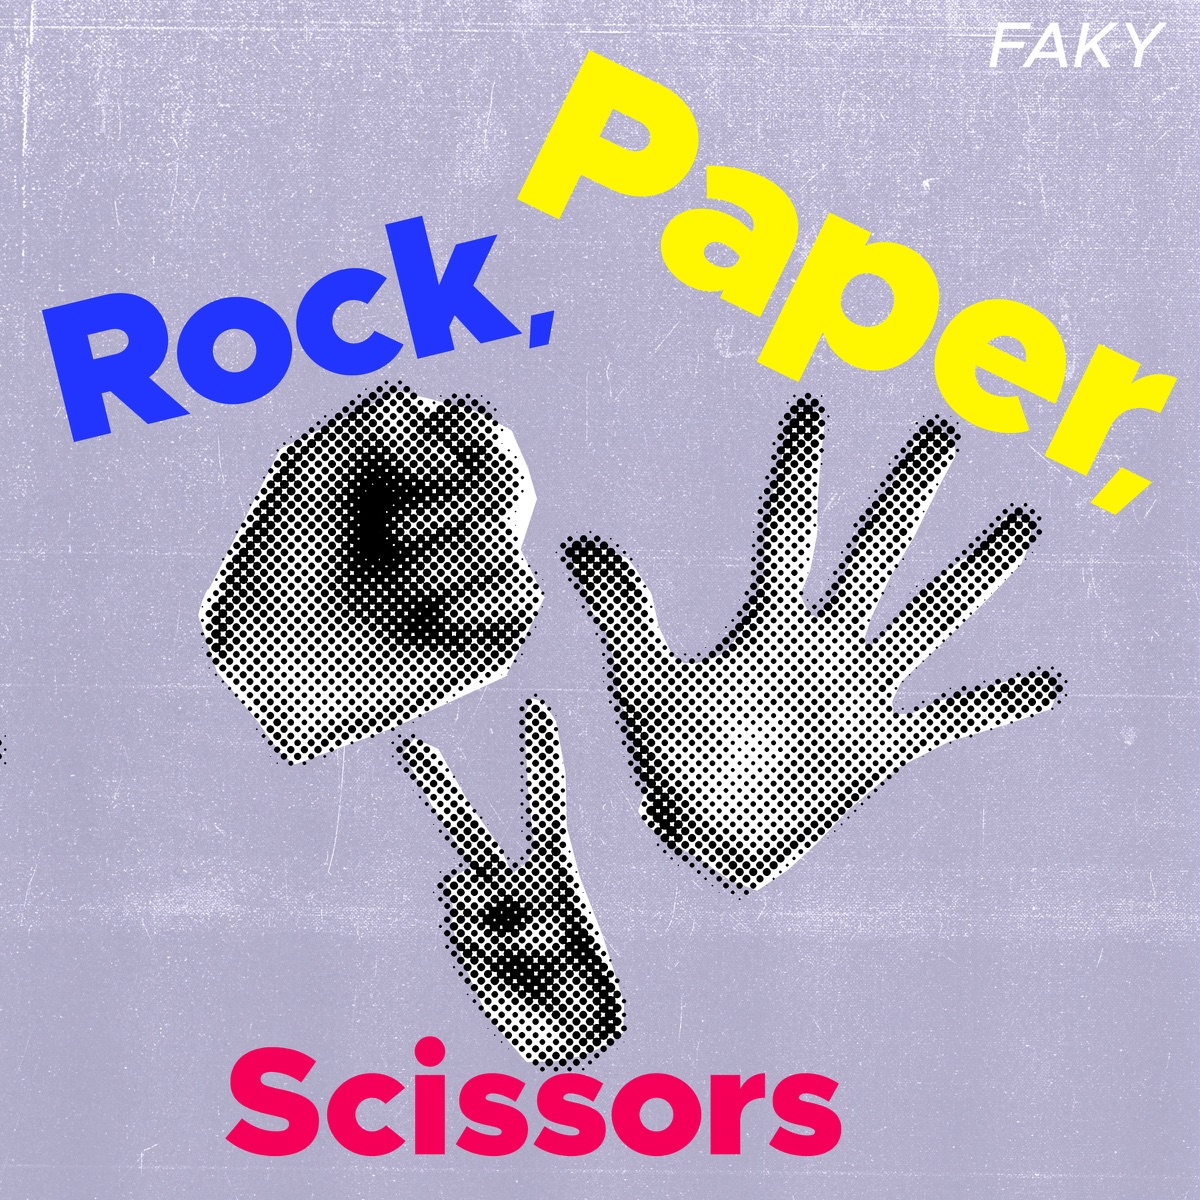 『FAKY - Rock, Paper, Scissors』収録の『Rock, Paper, Scissors』ジャケット